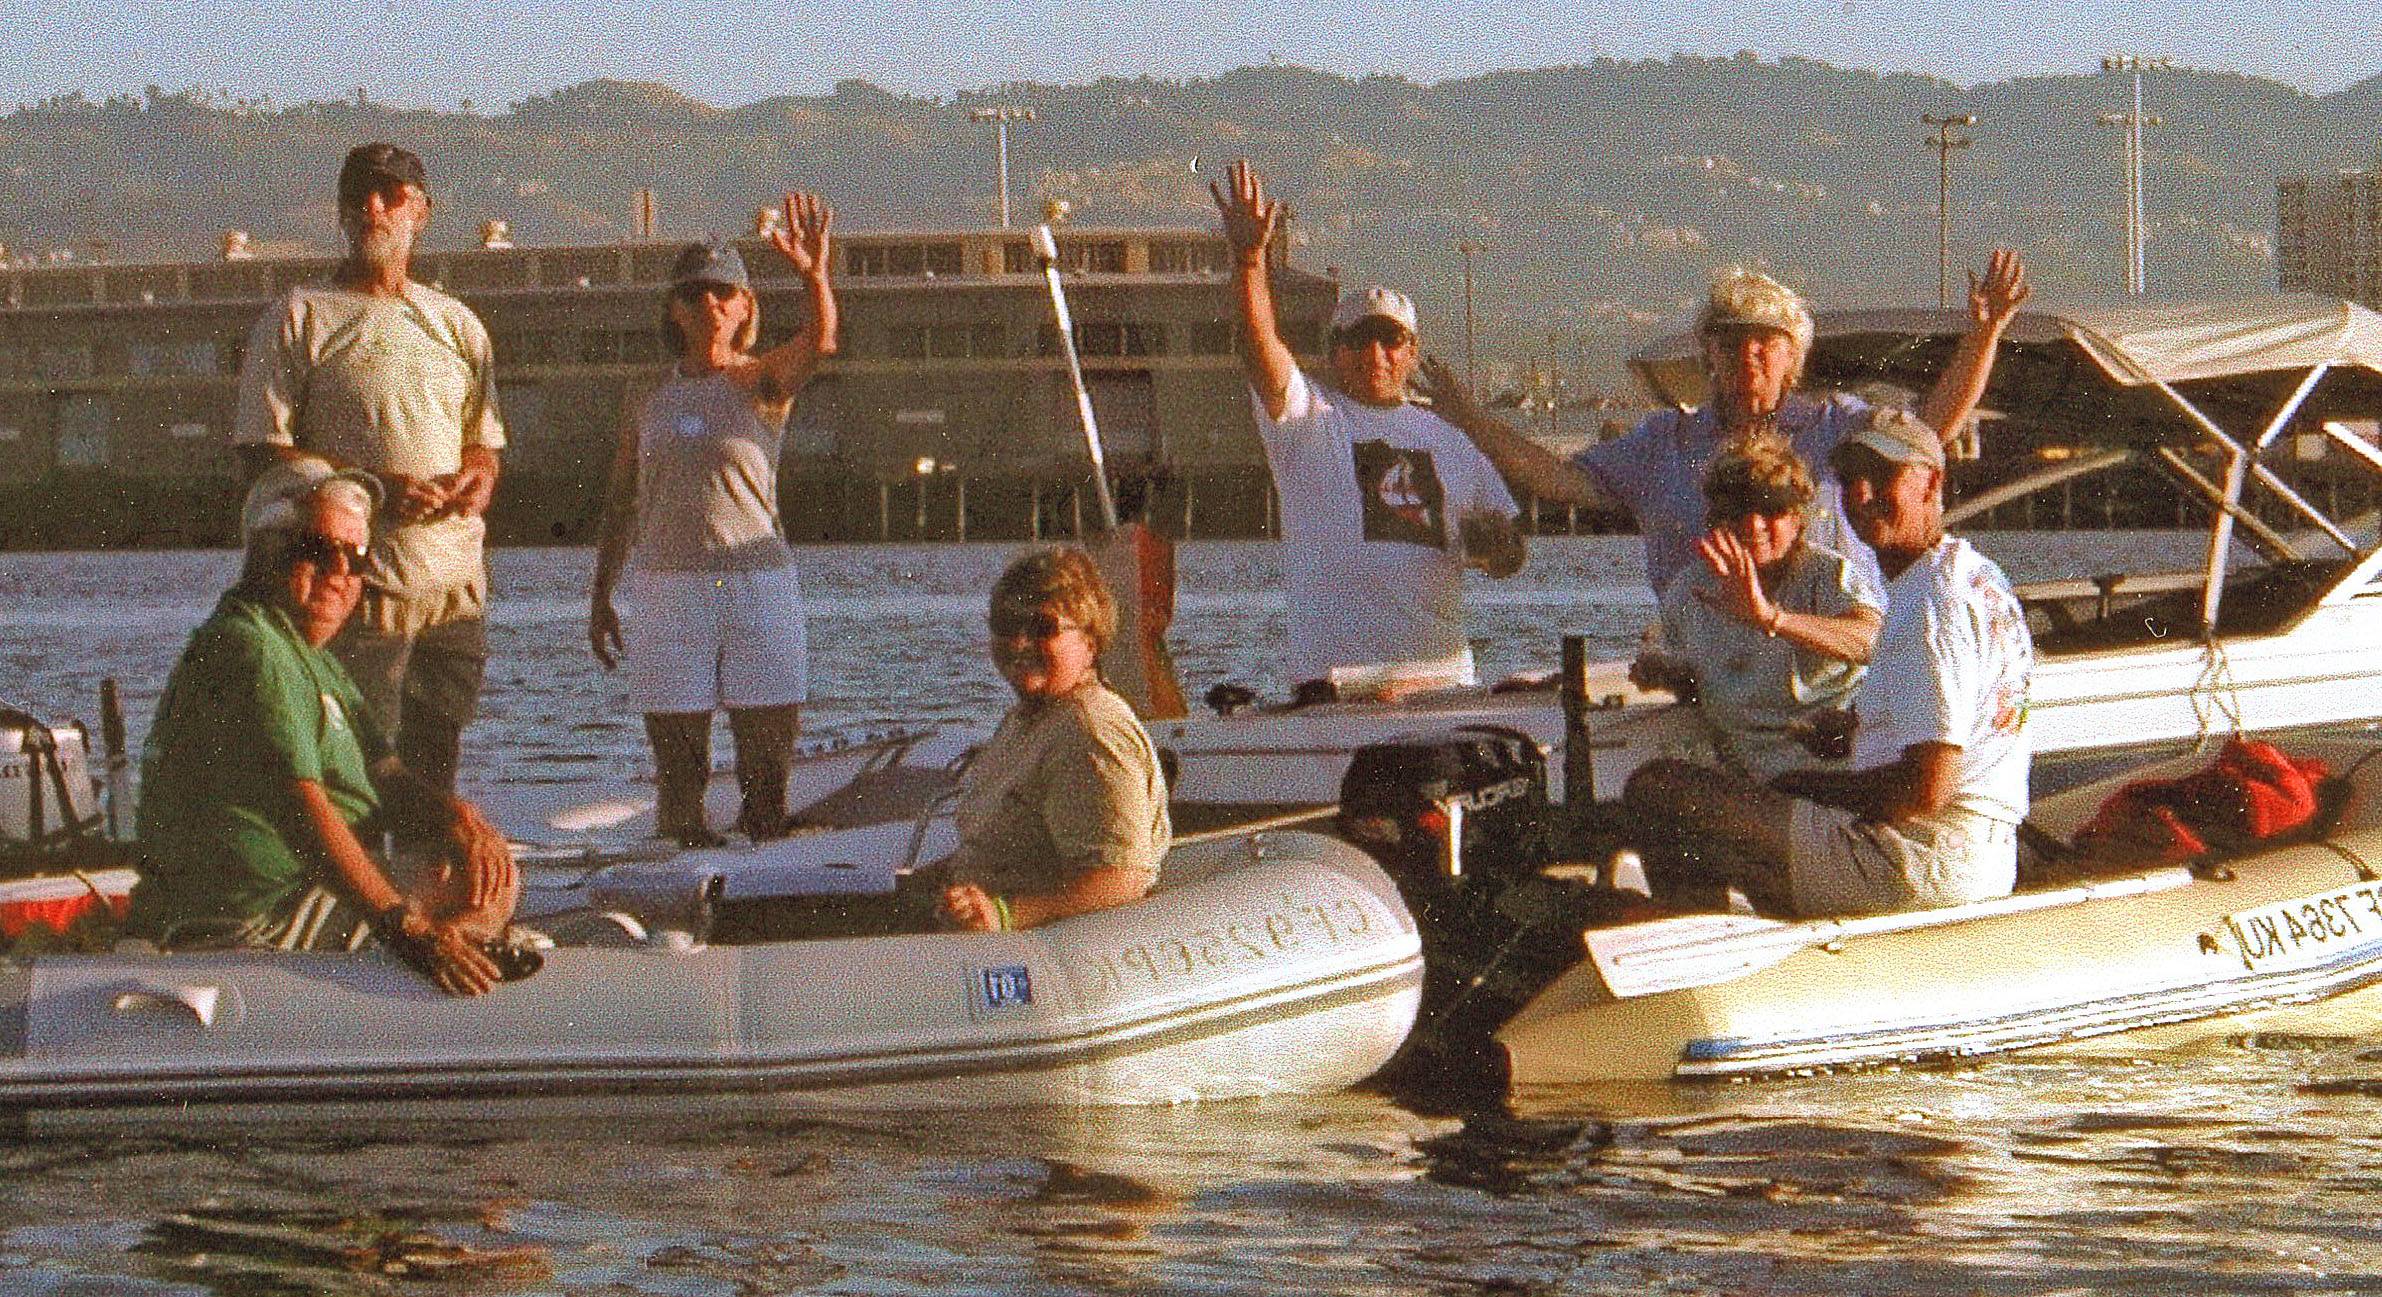 Good Memories - Encinal Yacht Club Summer Sailstice 2001 